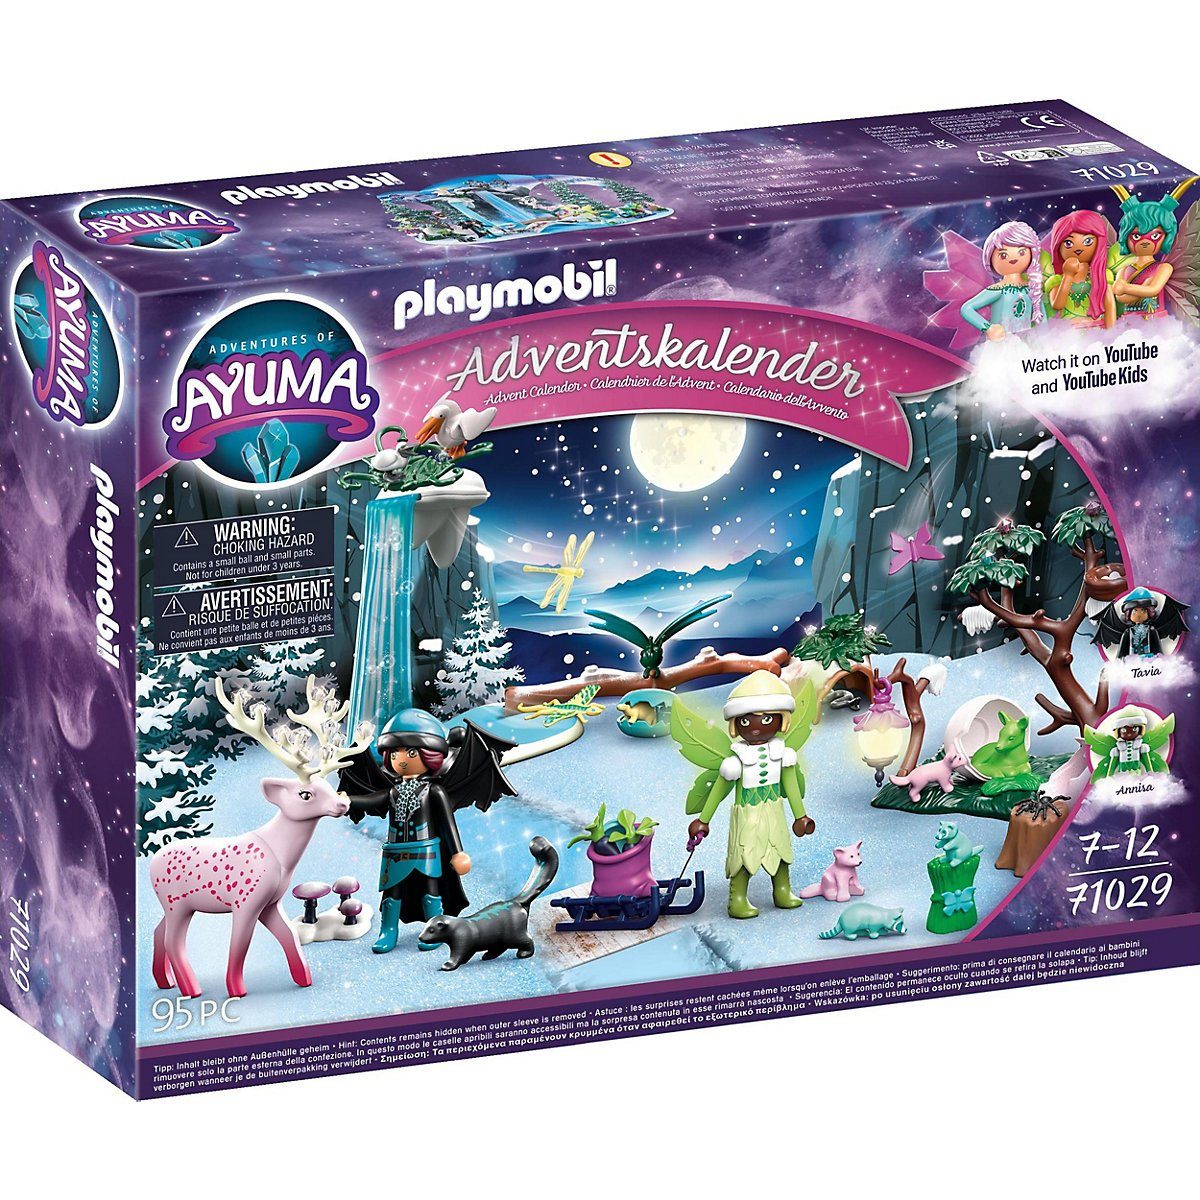 Playmobil® Konstruktions-Spielset »Adventures of Ayuma - Adventskalender«